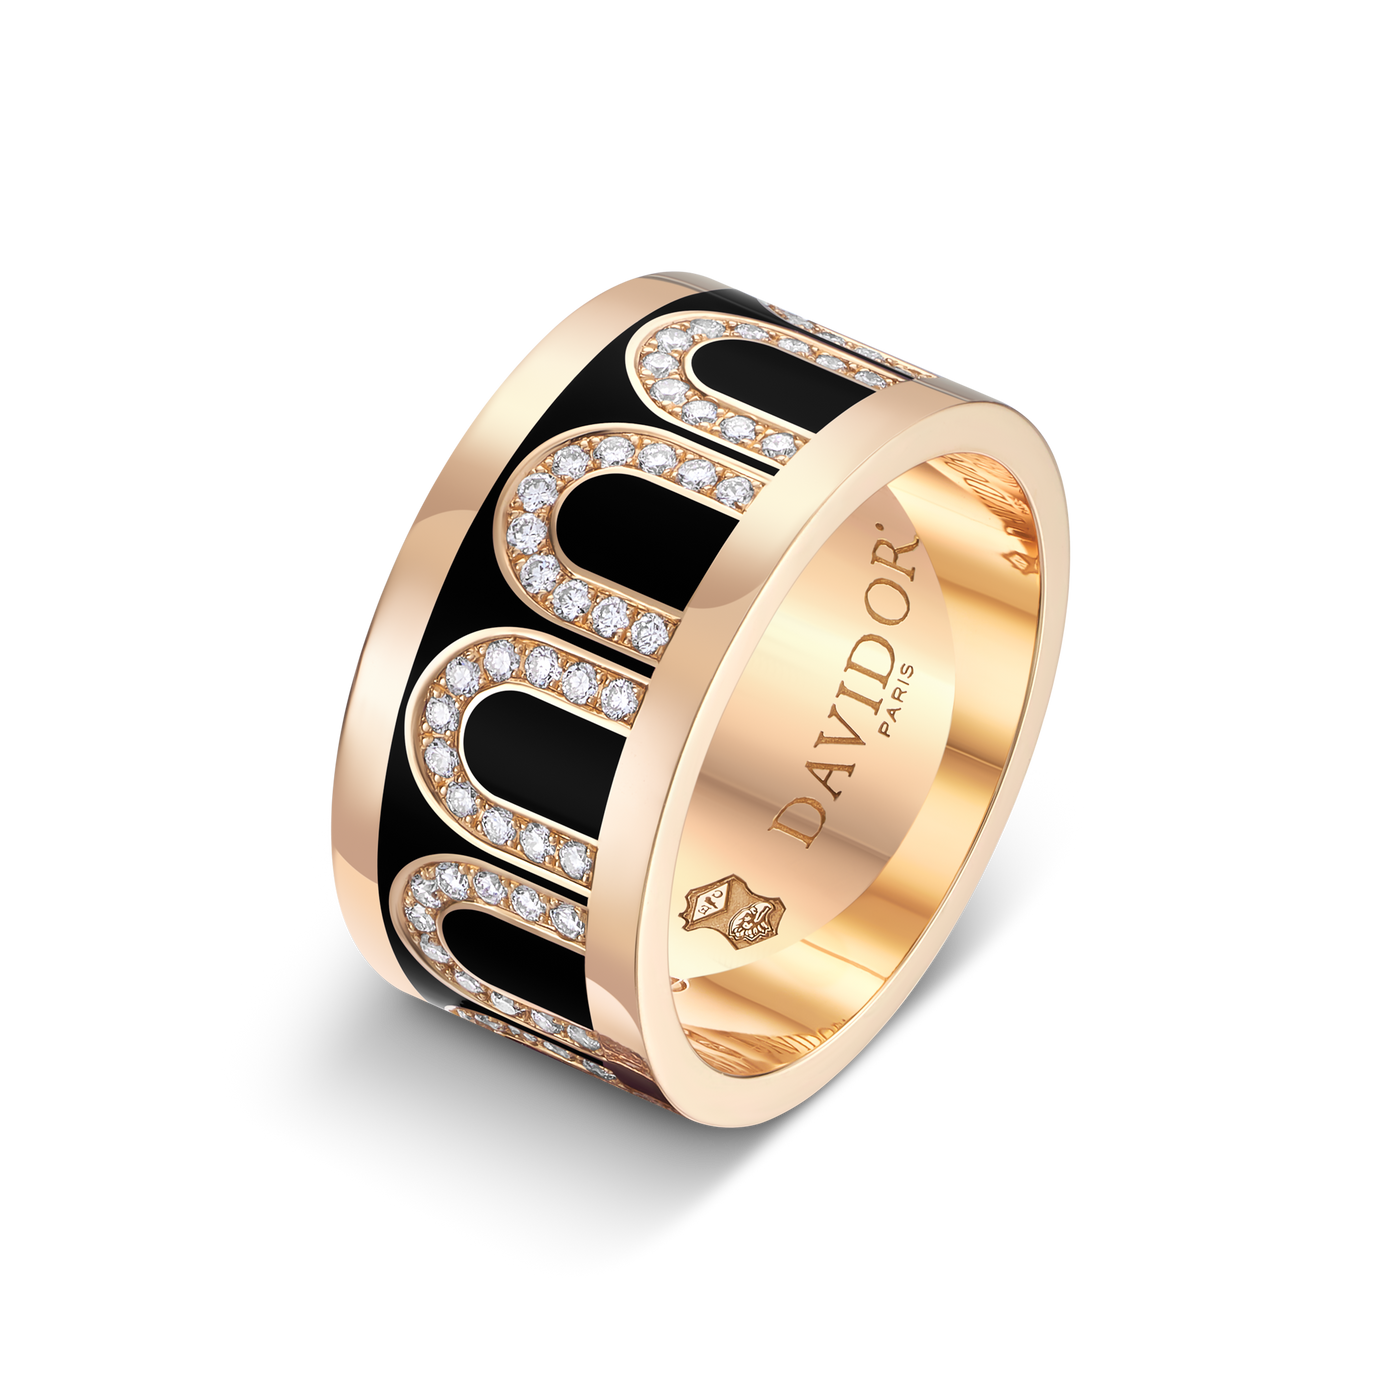 L'Arc de DAVIDOR Ring GM, 18k Rose Gold with Caviar Lacquered Ceramic and Arcade Diamonds - DAVIDOR